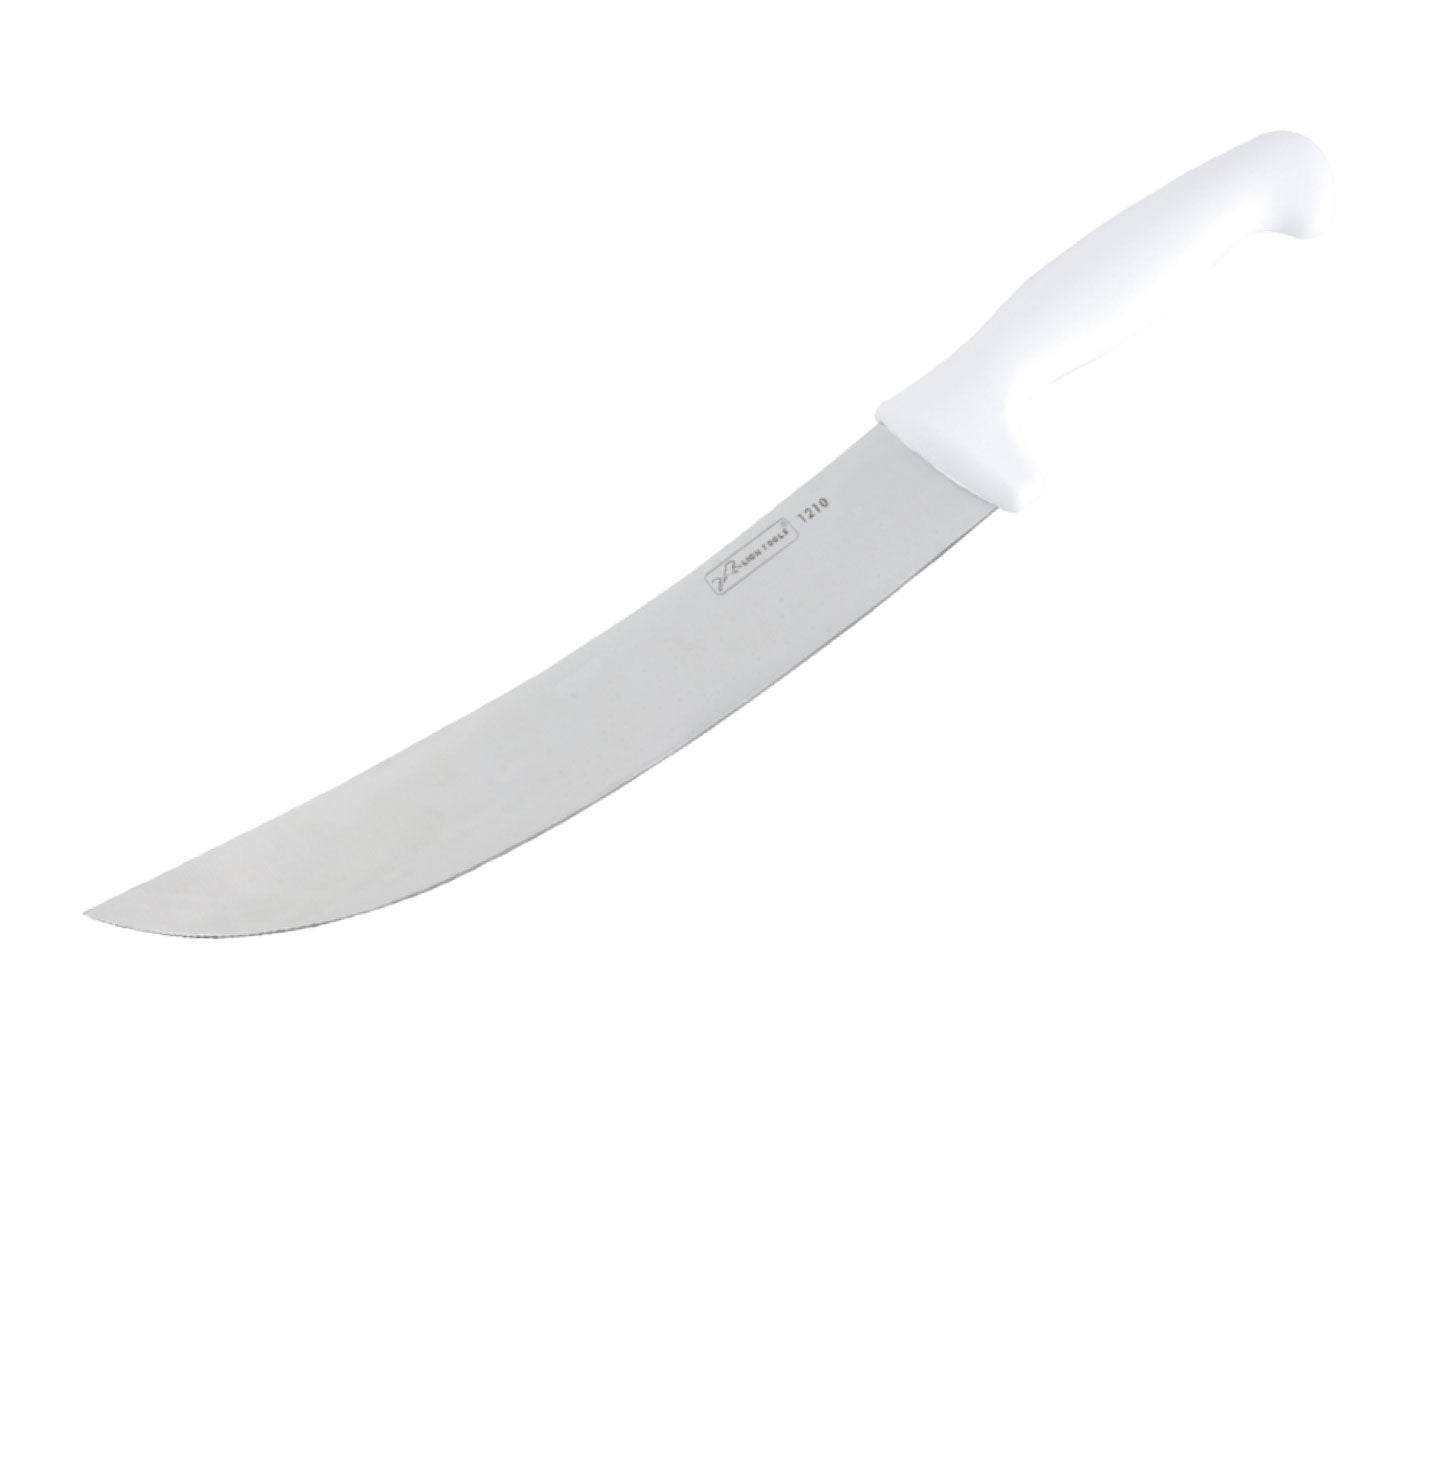 Cuchillo Professional de Sierra para Jam?n 10 Pulgadas Acero Inoxidable